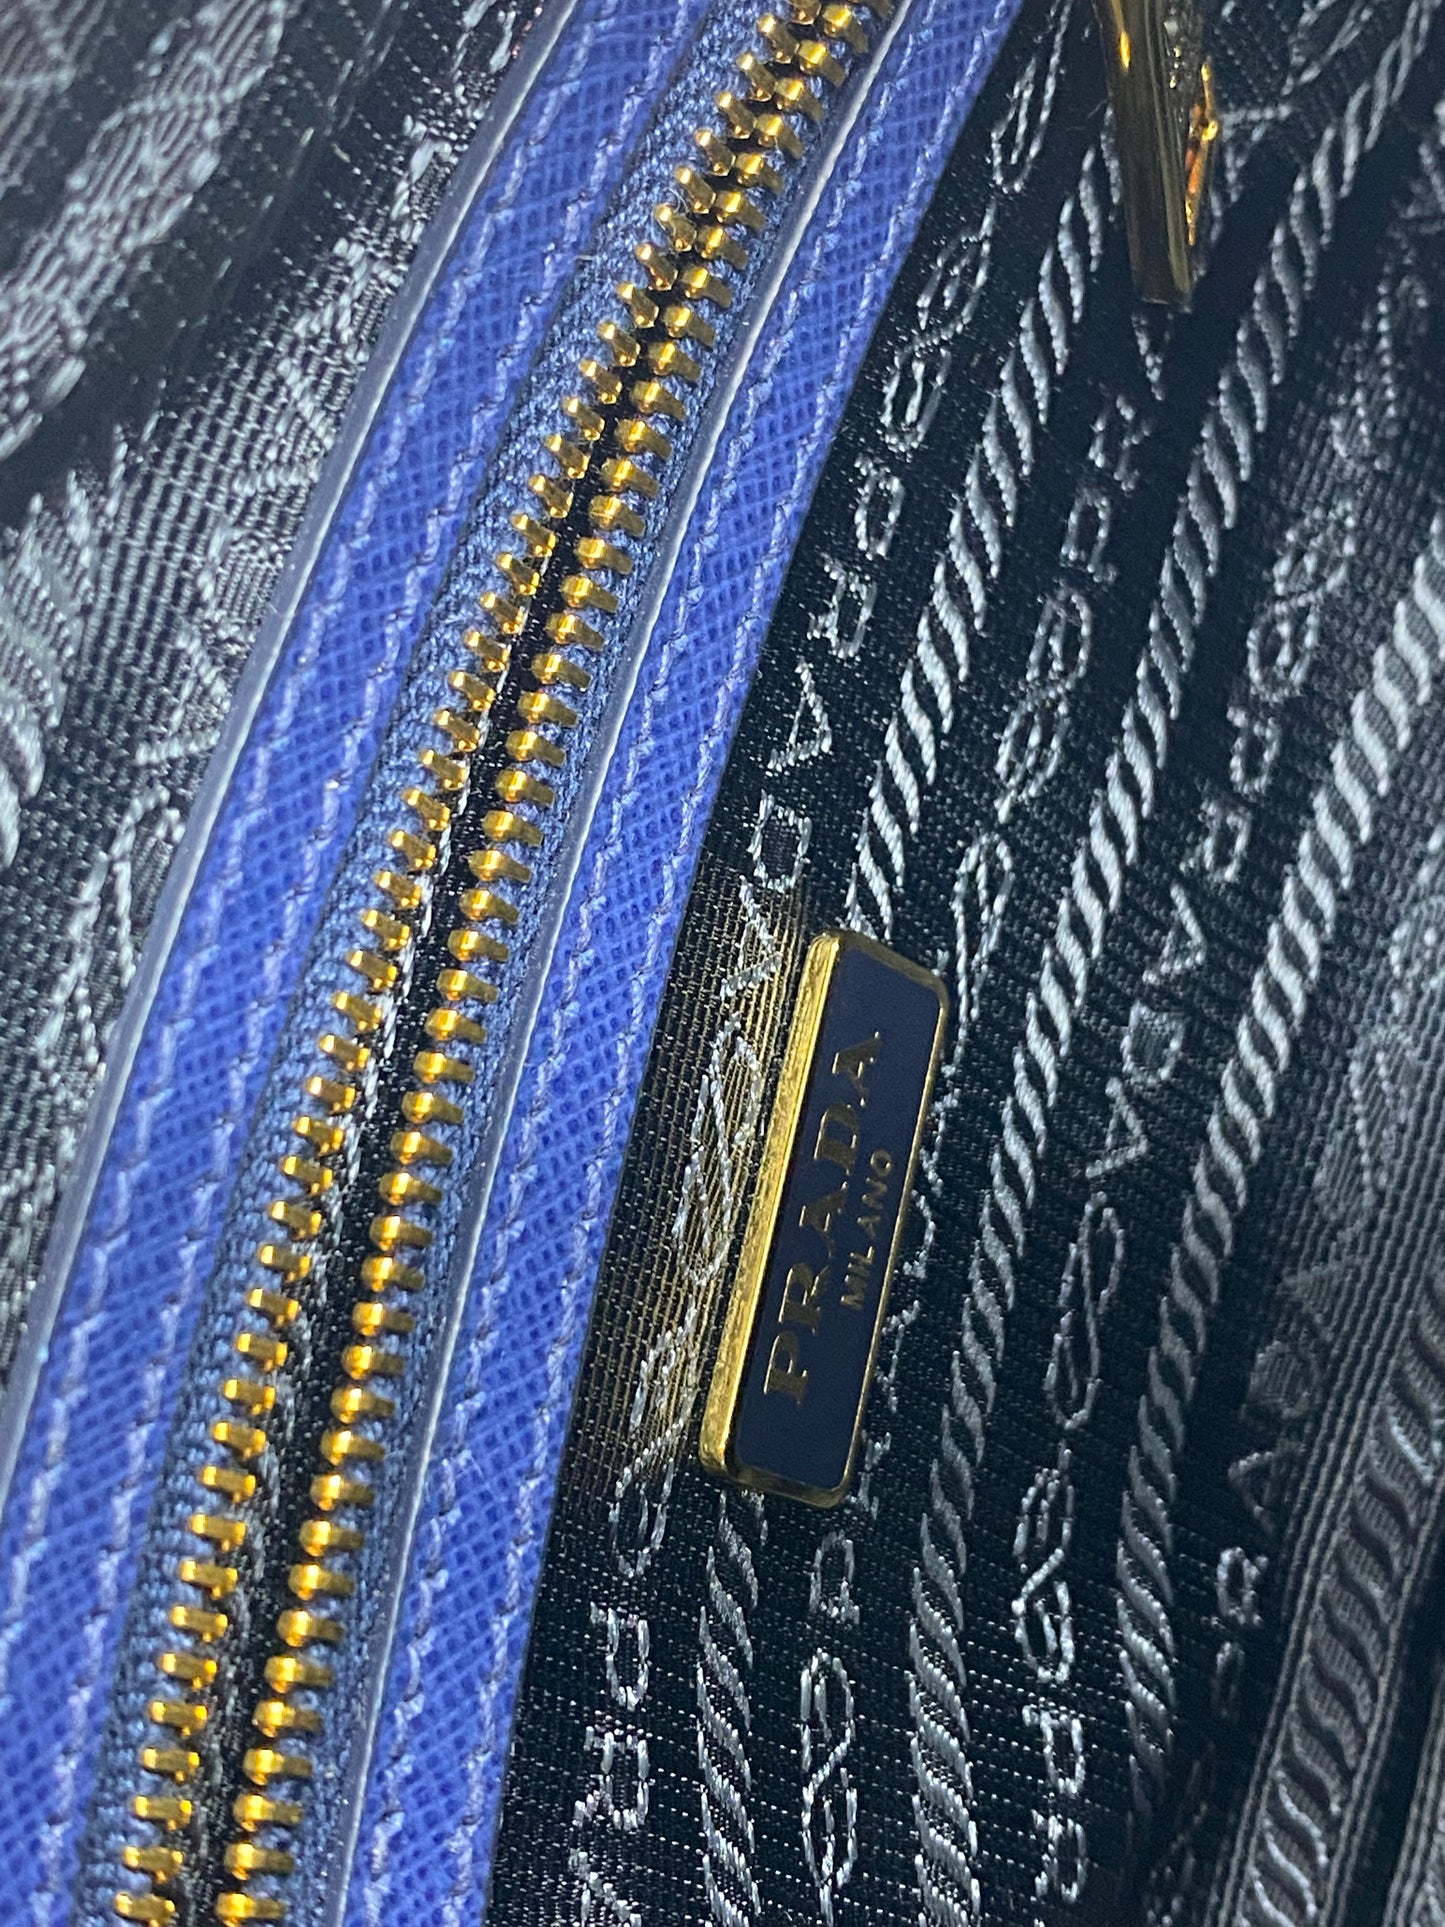 Prada Front Pocket Crossbody Bag Saffiano Leather Small